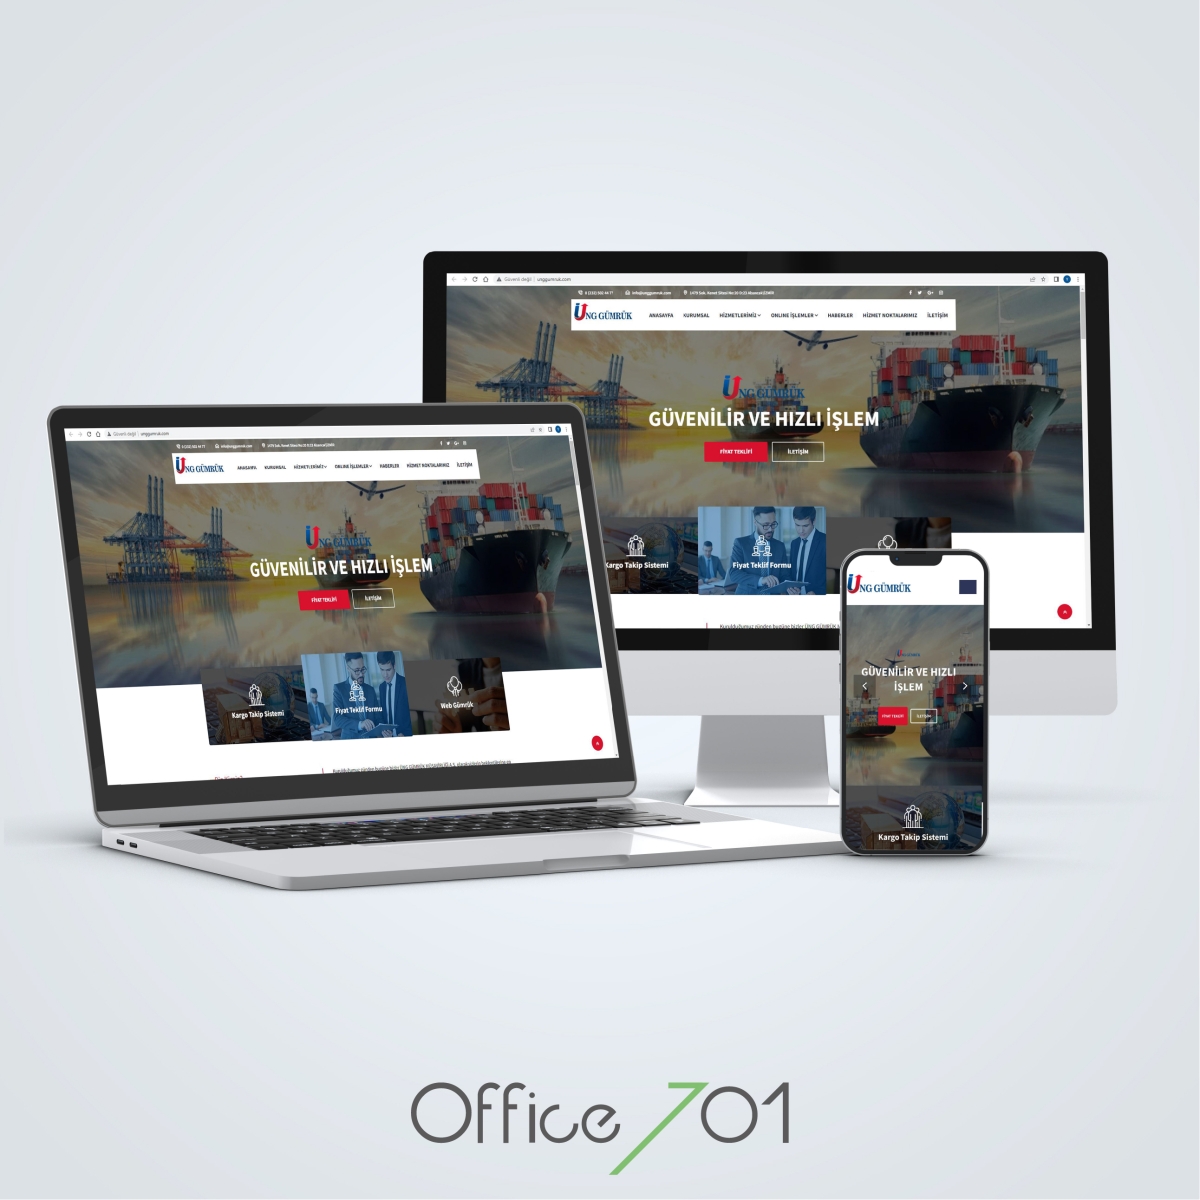 Office701 | Ung Gumruk | Business Services Website